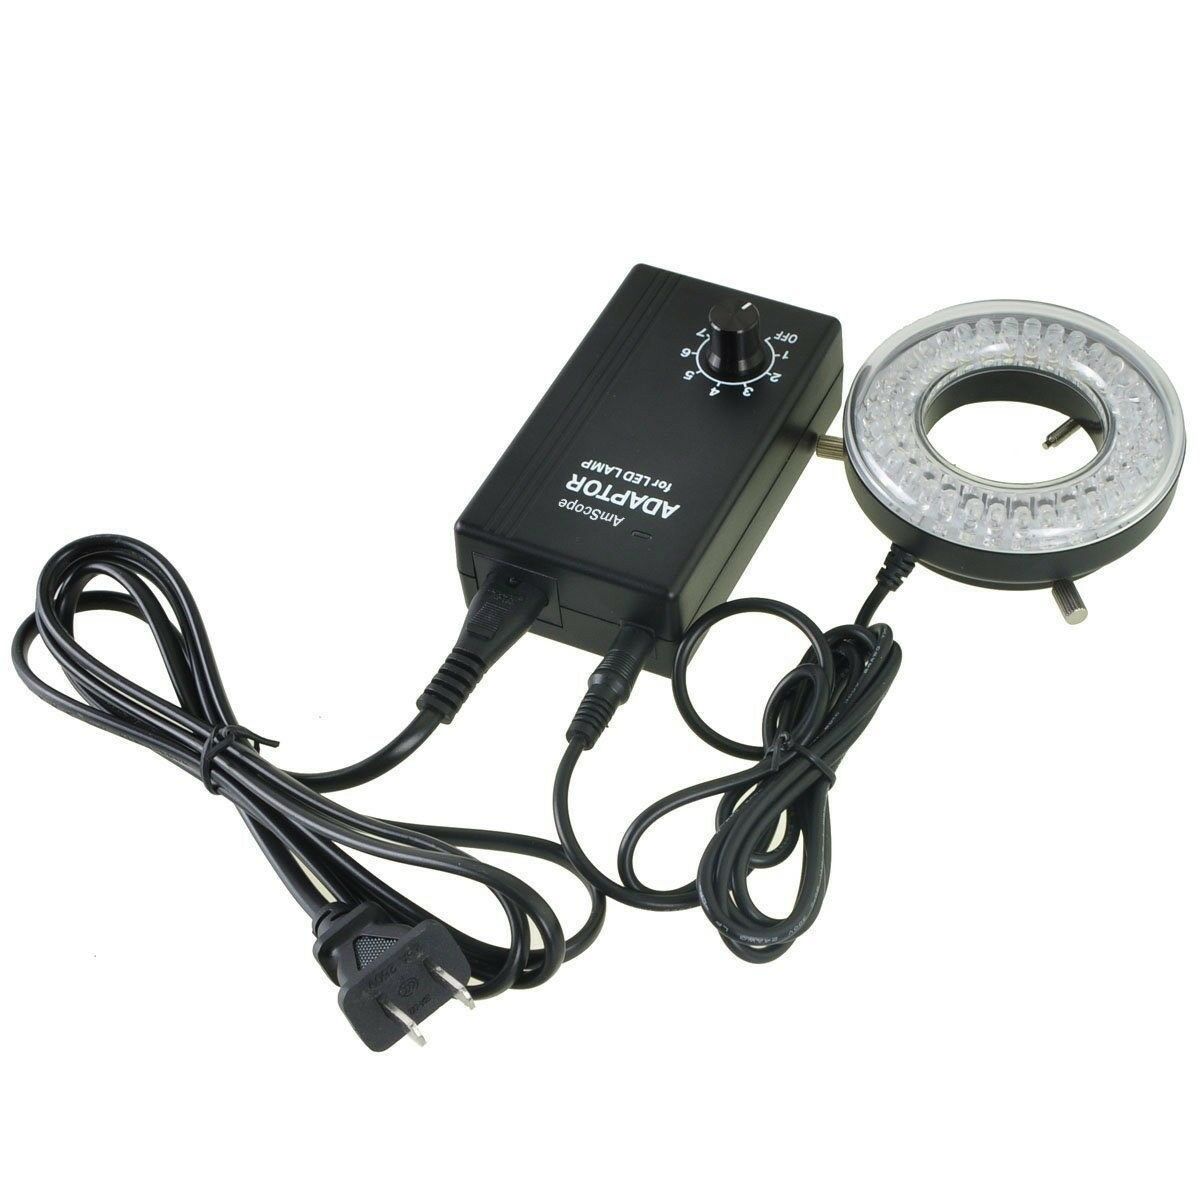 Amscope Adjustable 64-led Ring Light For Microscopes W/ Control Box 100v To 240v